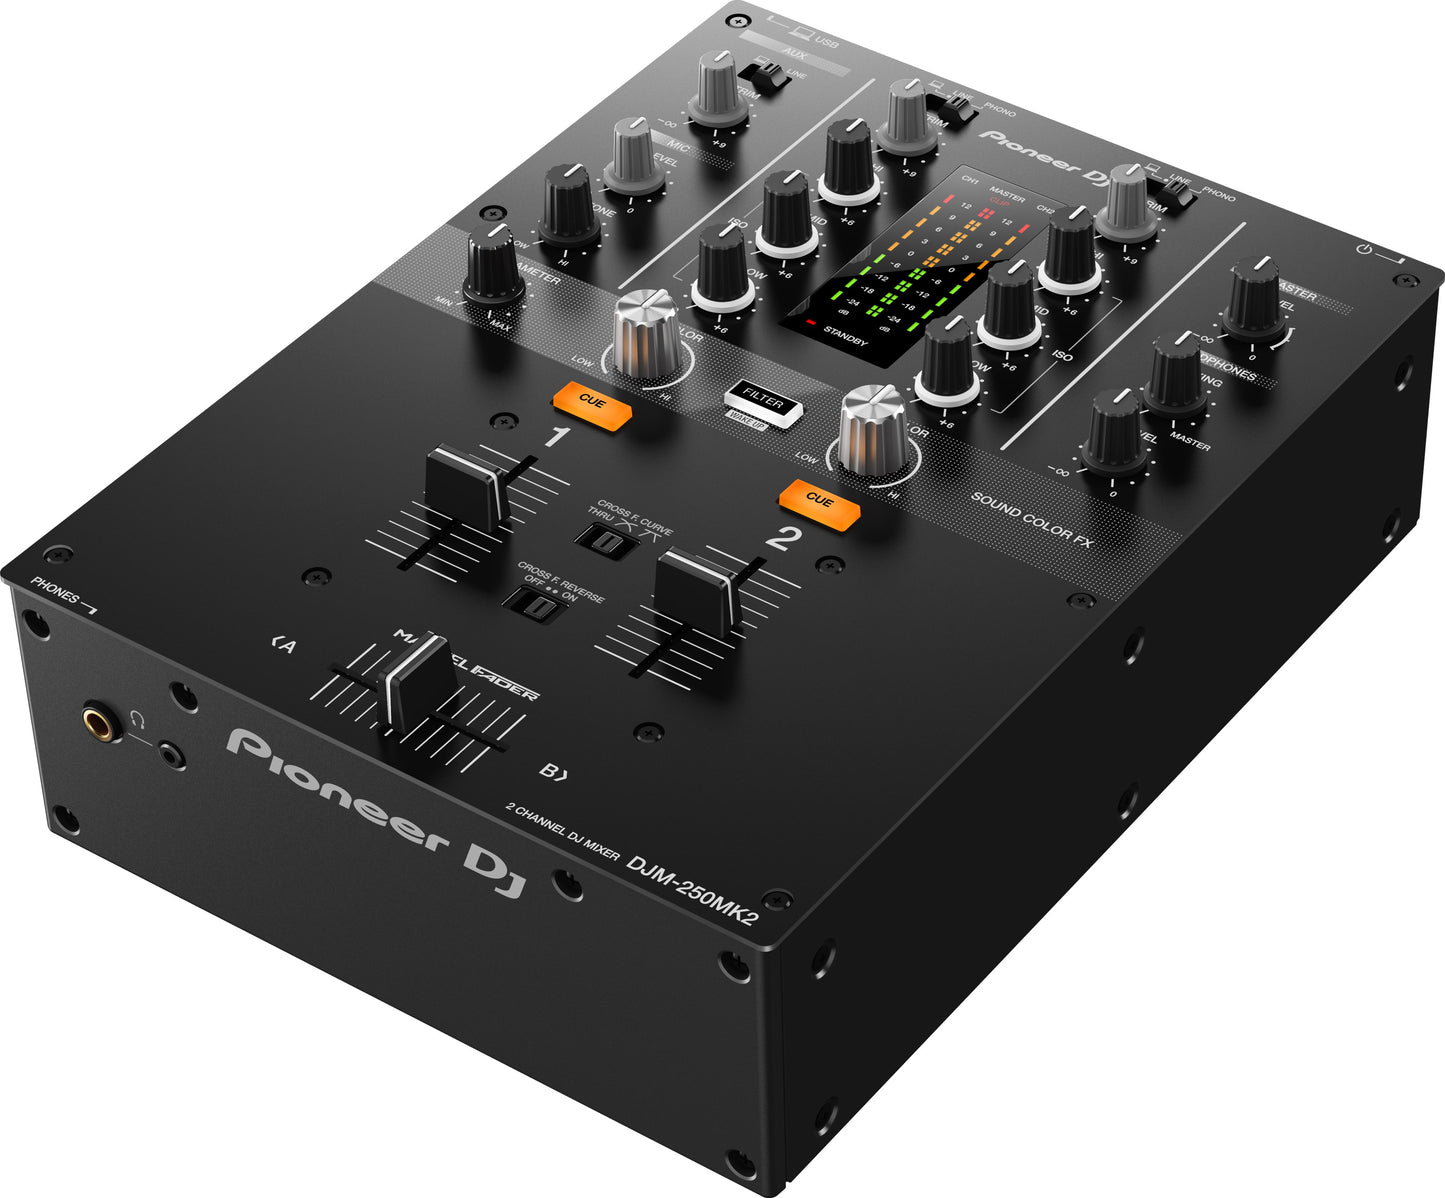 Pioneer DJ DJM-250MK2 2-channel DJ mixer with independent channel filter